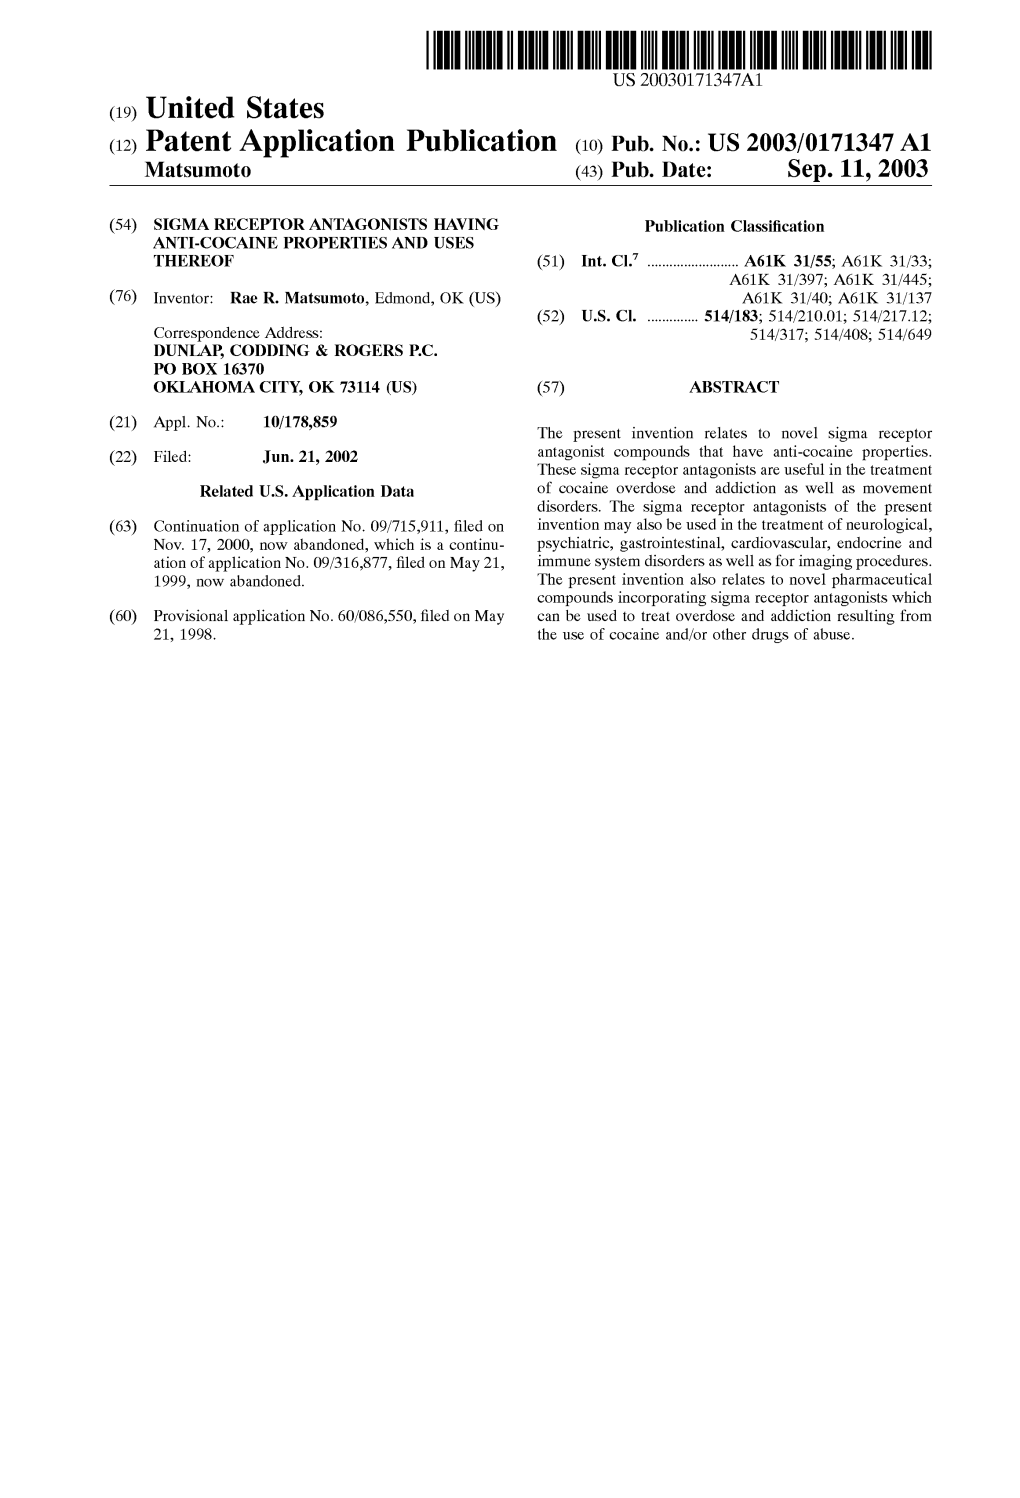 (12) Patent Application Publication (10) Pub. No.: US 2003/0171347 A1 Matsumoto (43) Pub